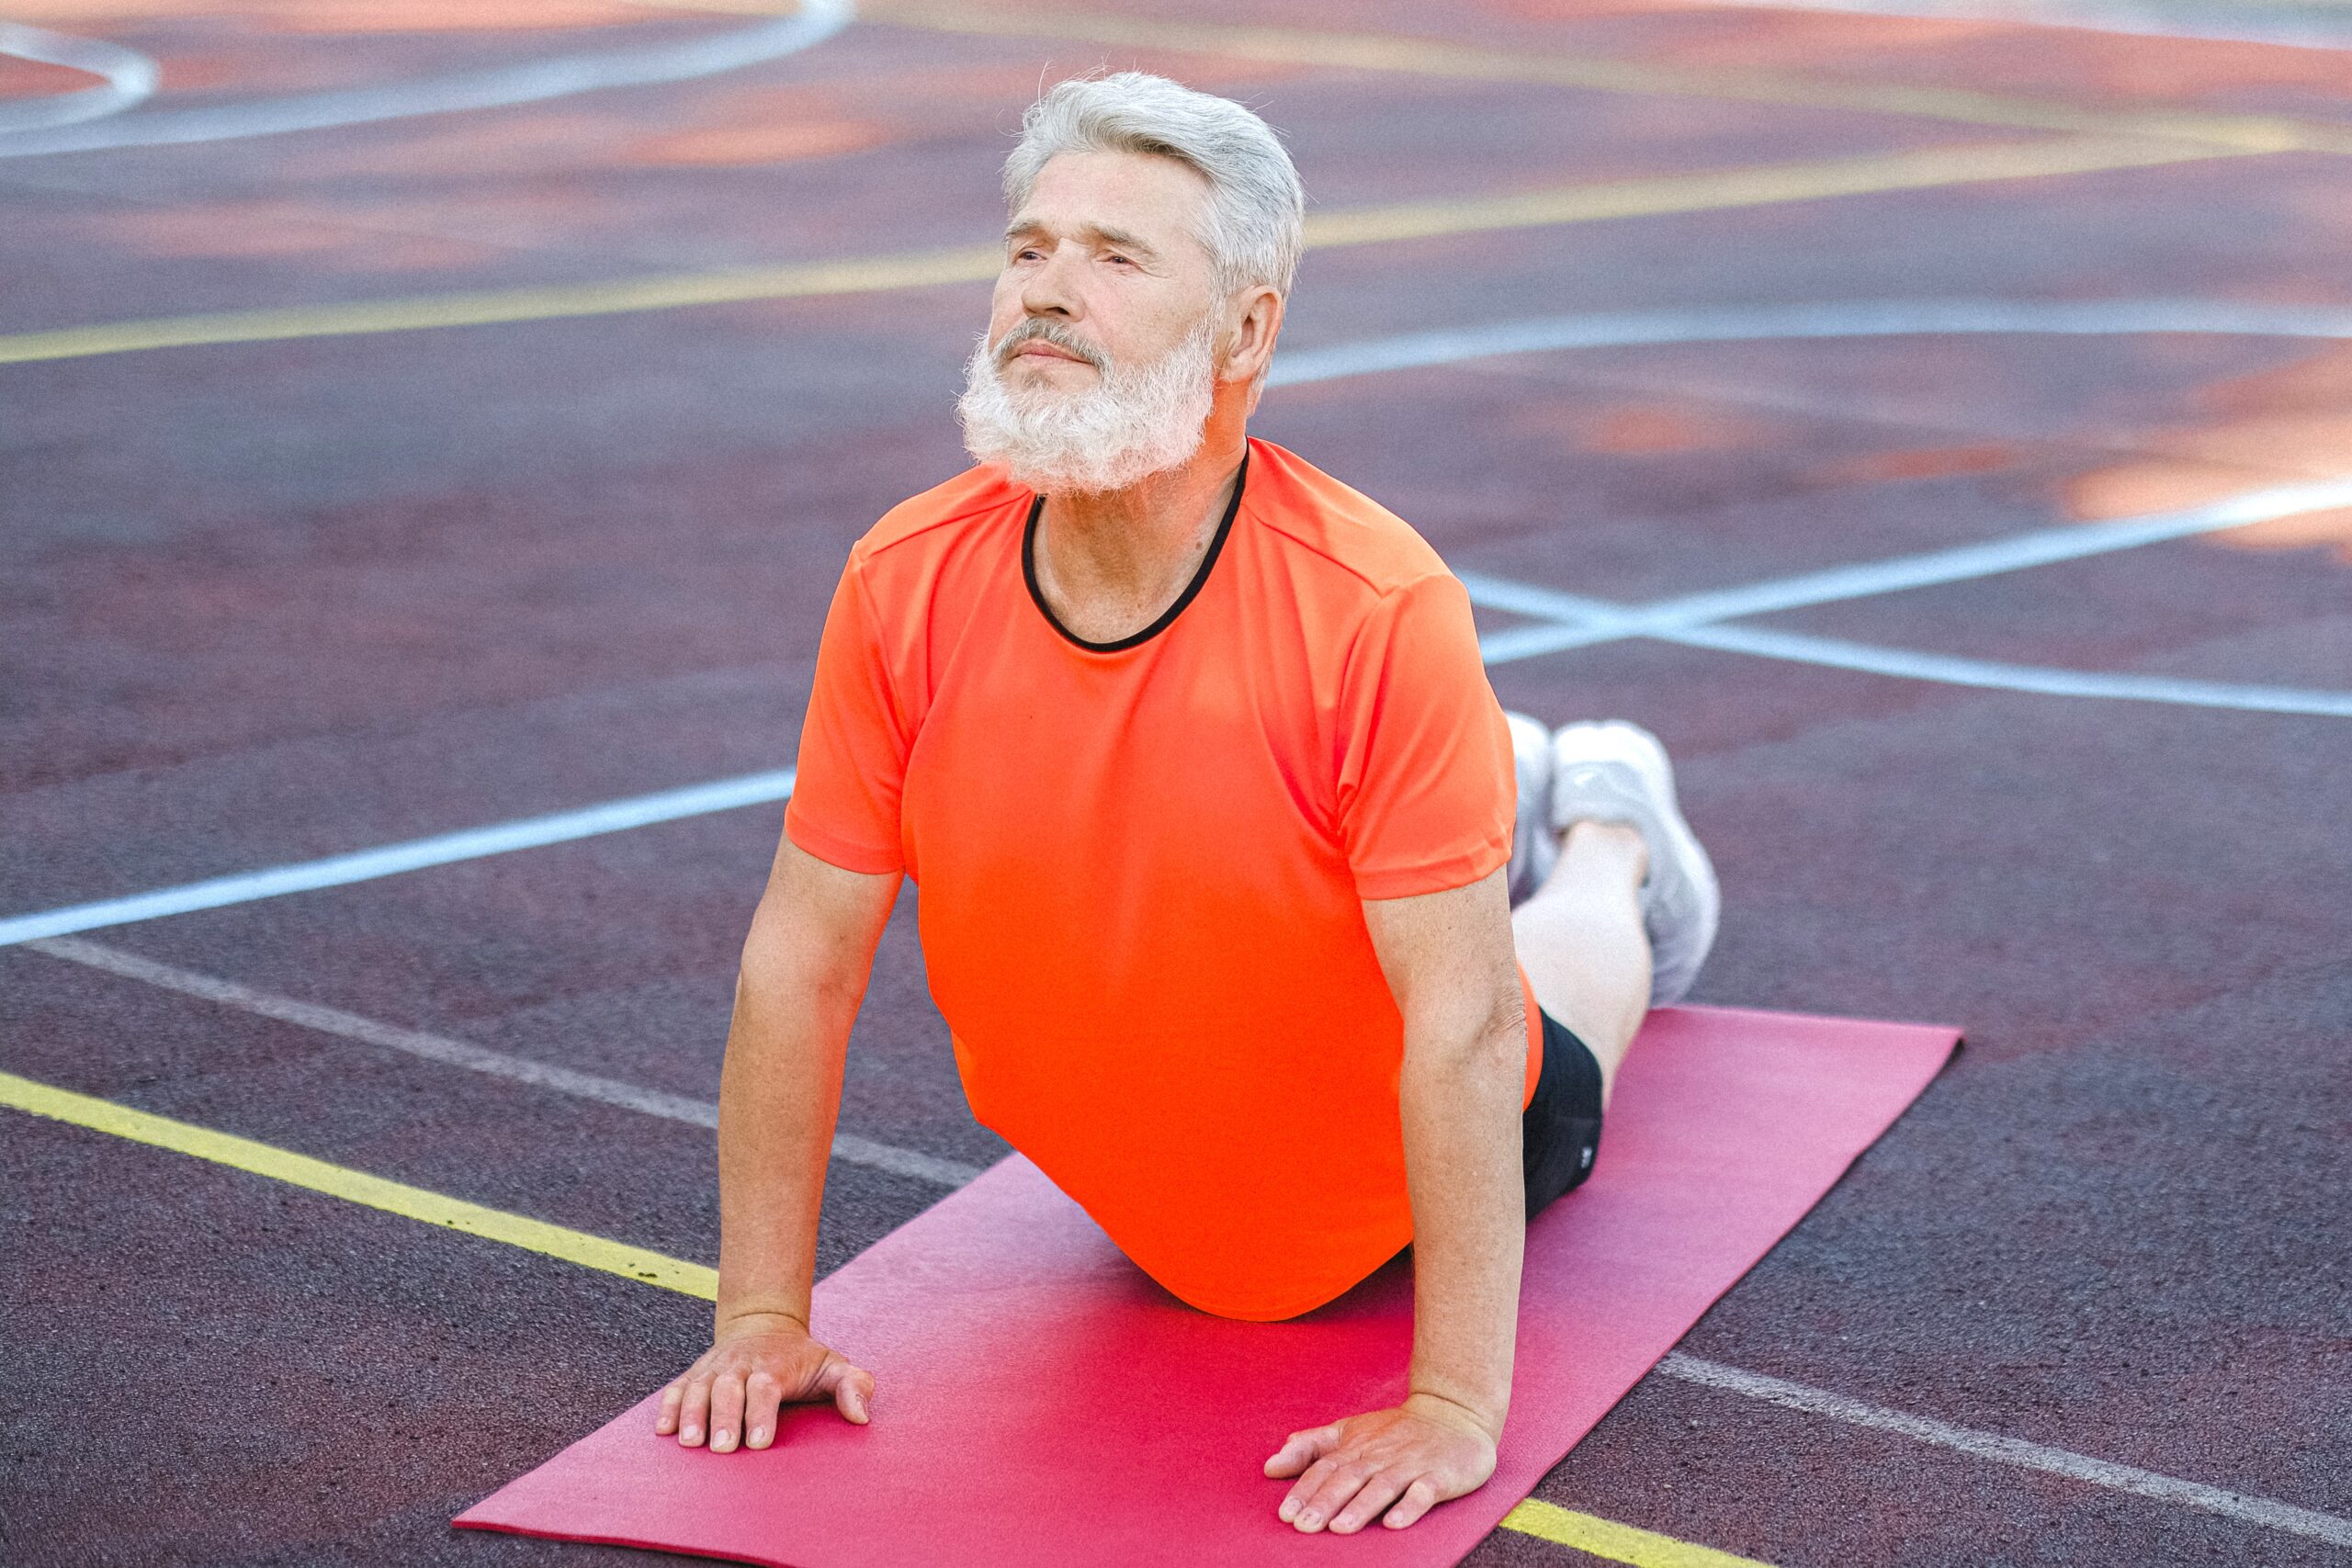 Man stretching on yoga mat